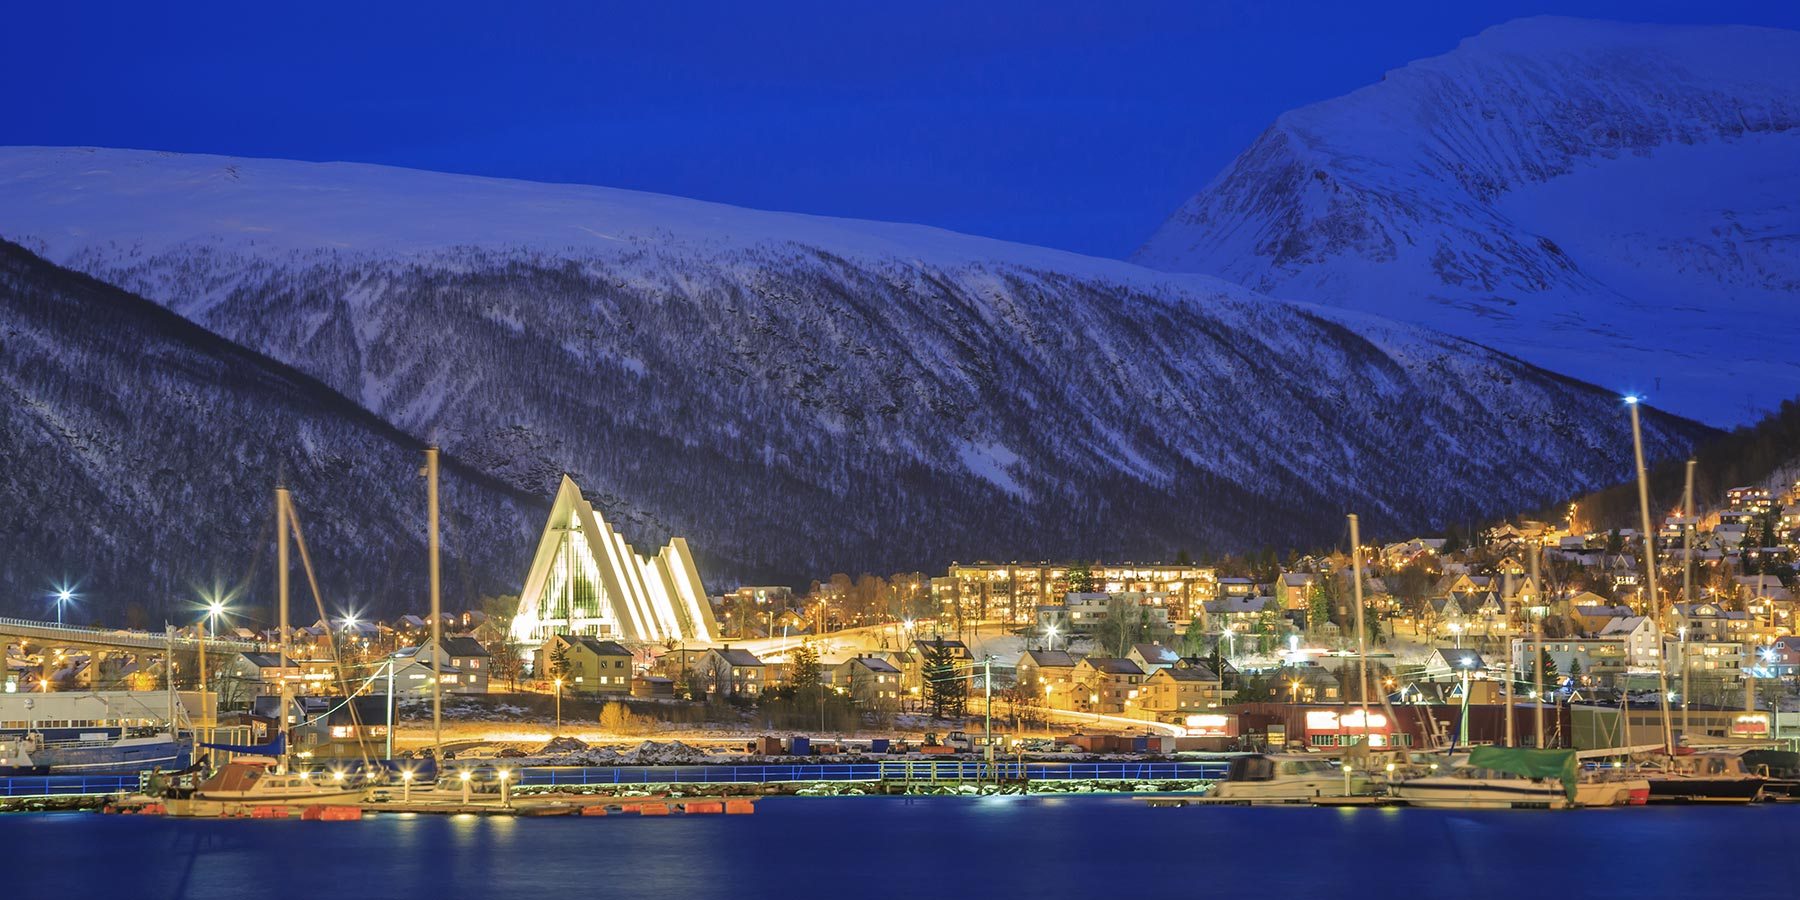 Places to stay: Tromsø